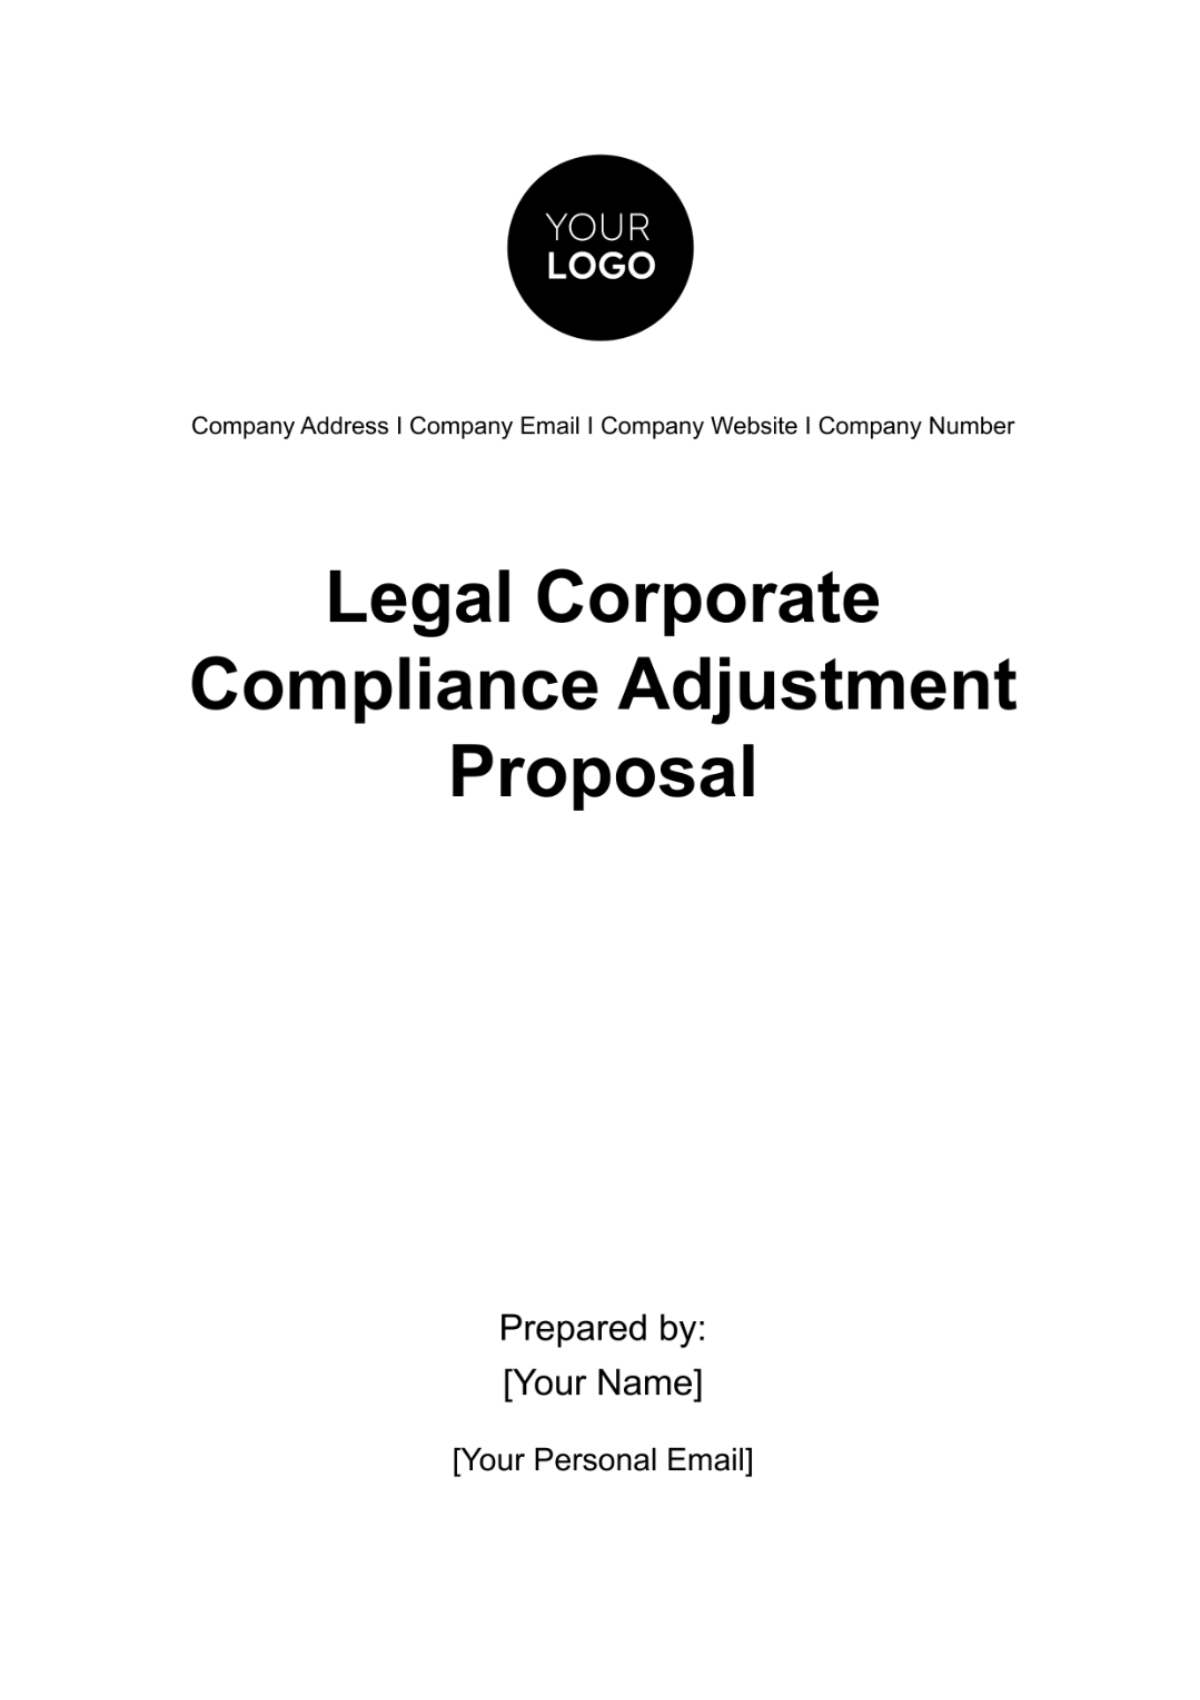 Legal Corporate Compliance Adjustment Proposal Template